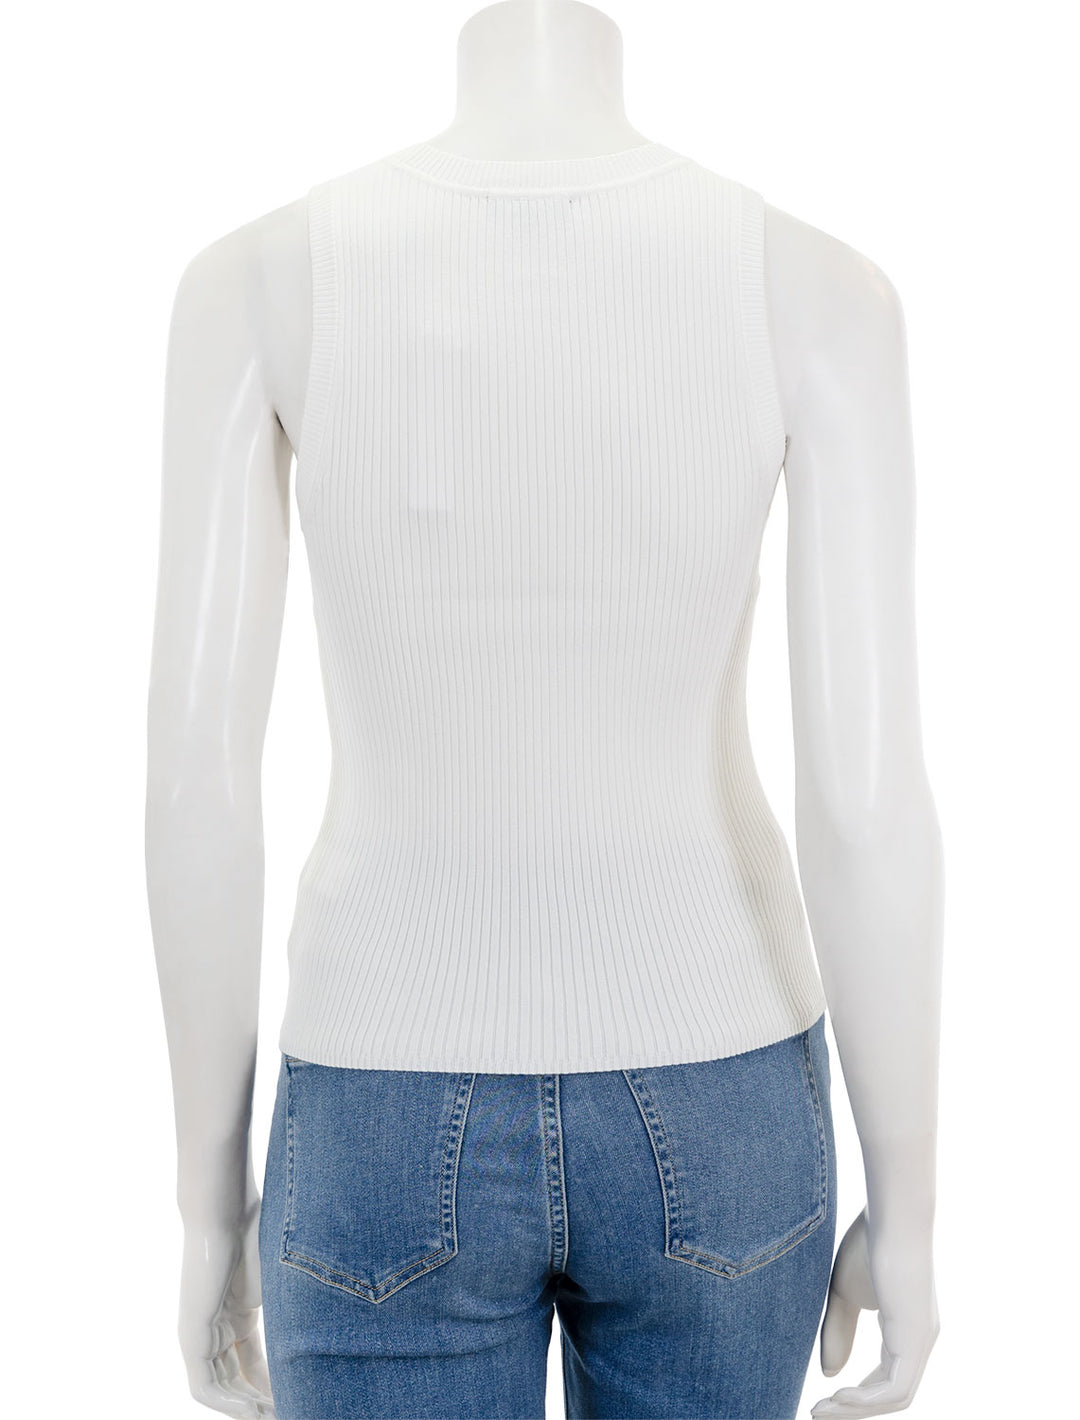 Back view of Lilla P.'s perfect rib tank sweater in white.